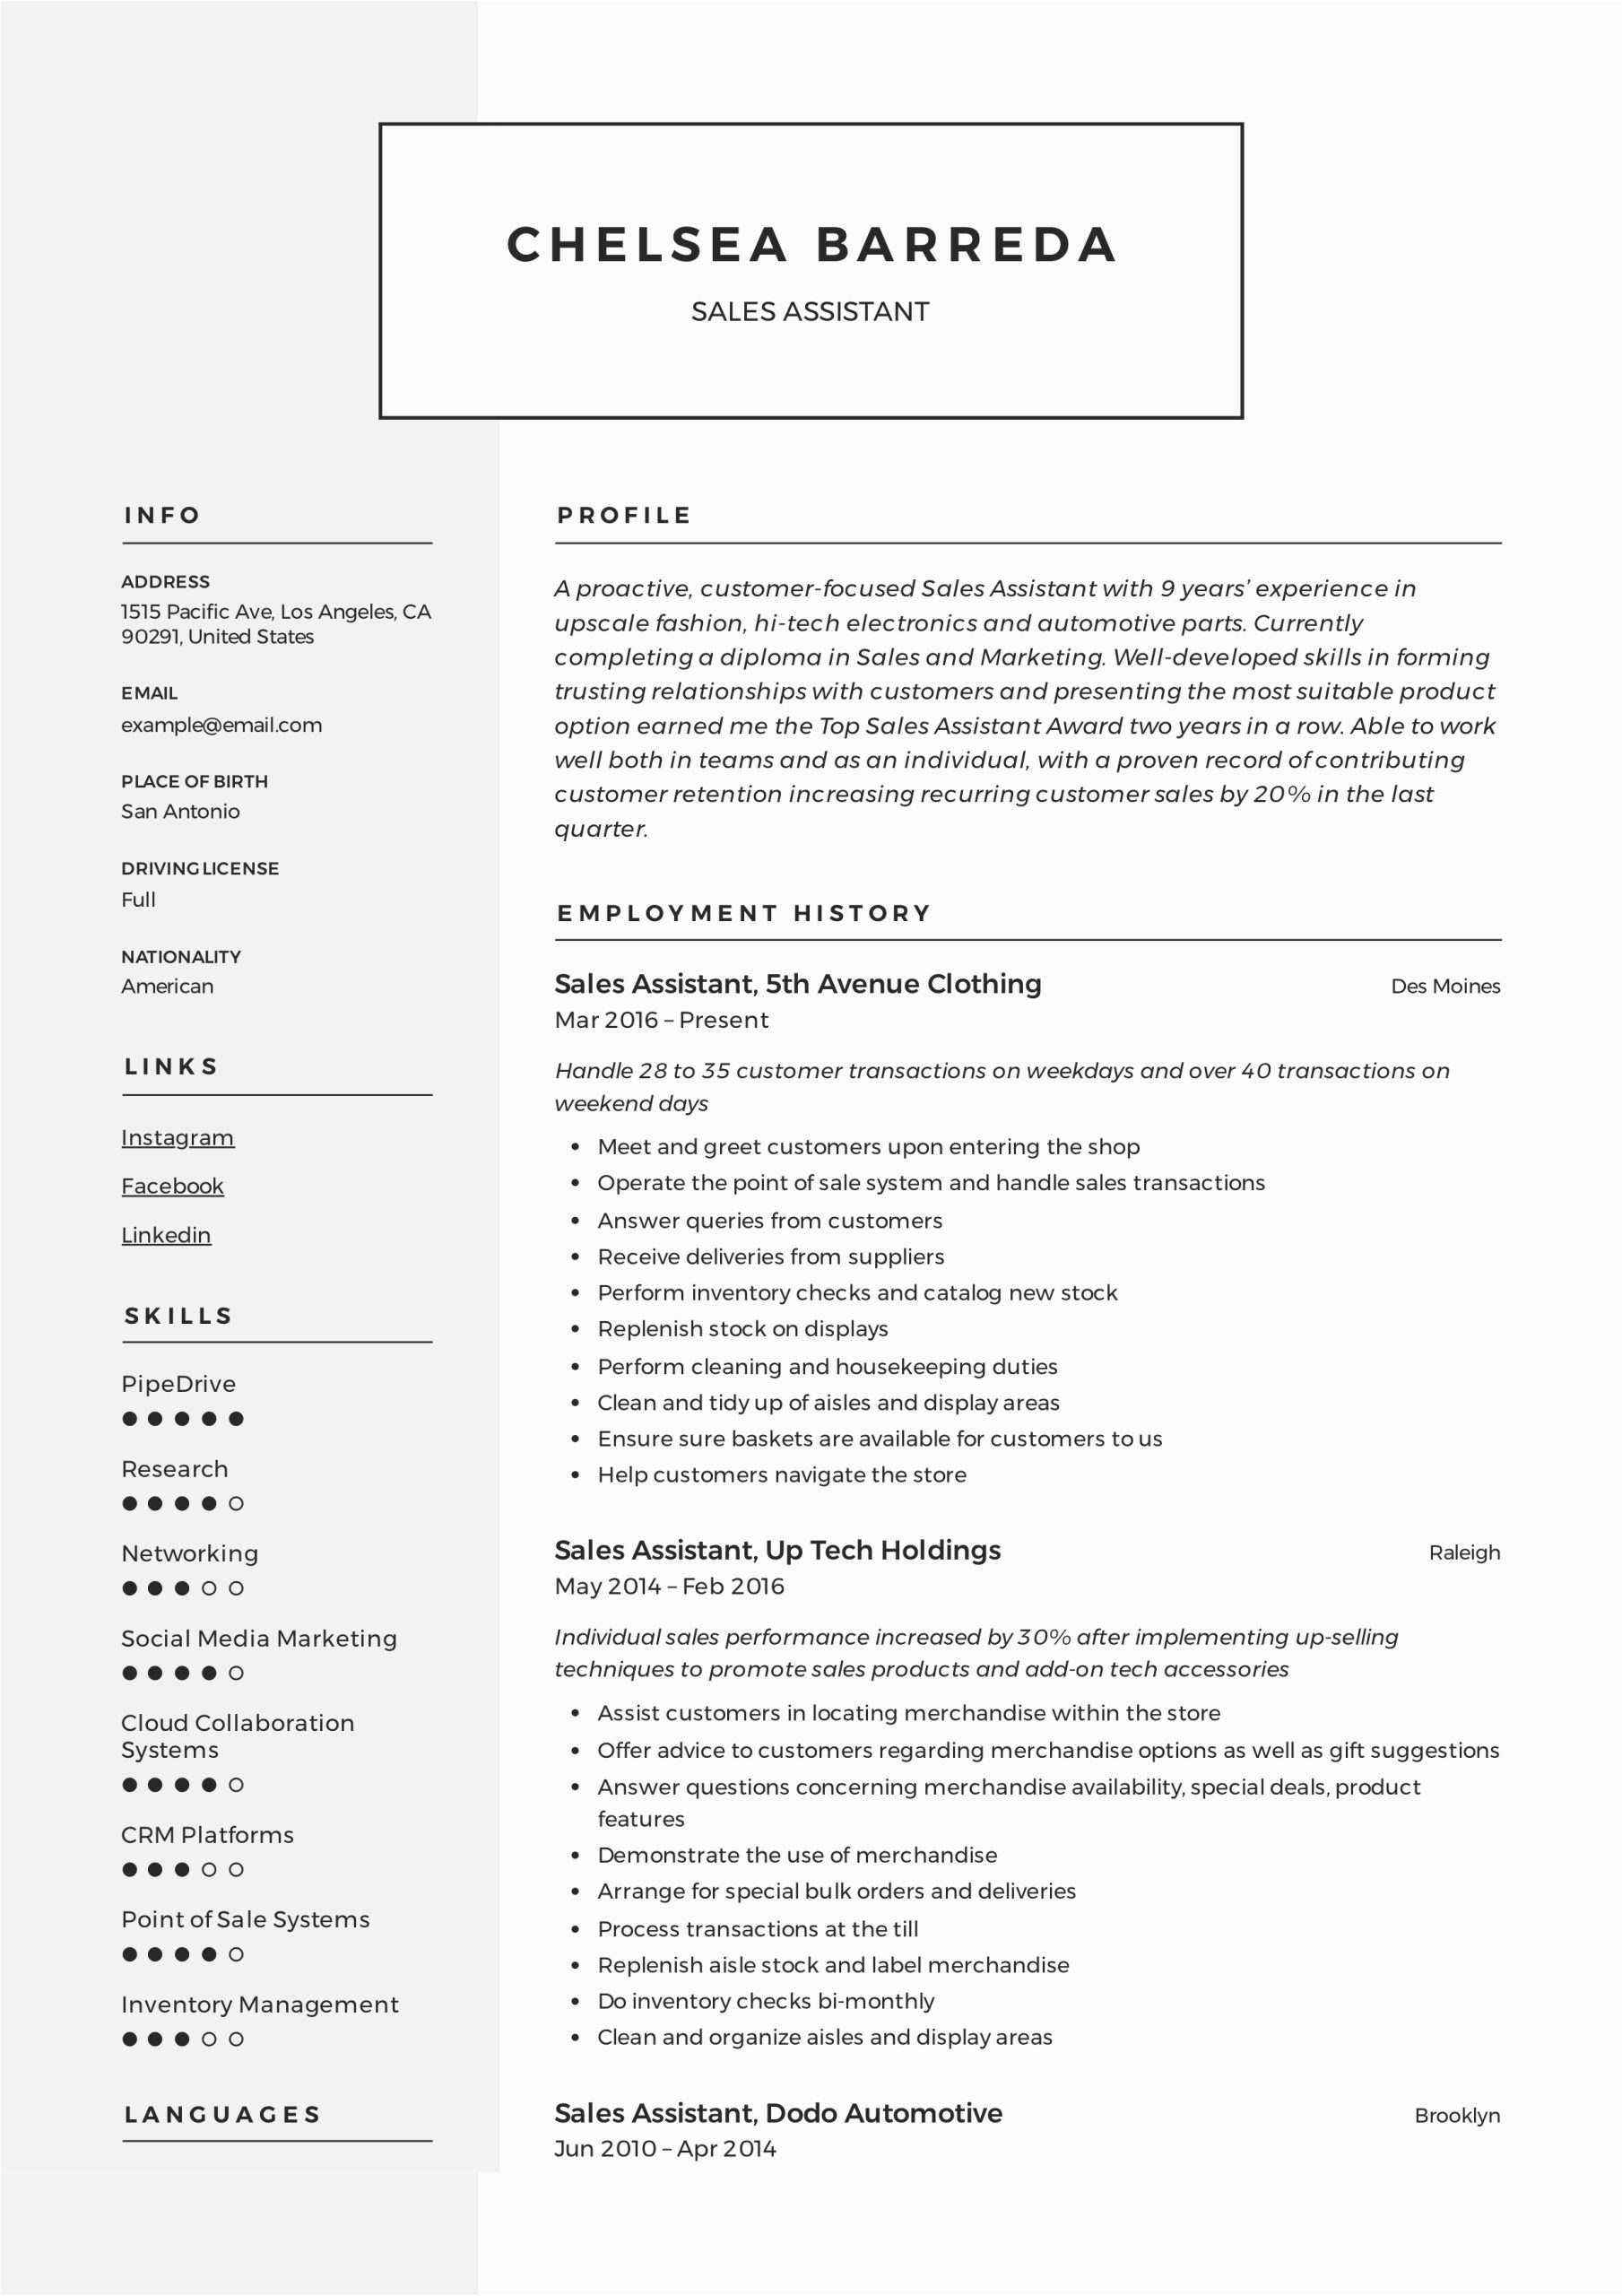 Sales assistant Job Description Resume Sample Sales assistant Resume & Writing Guide